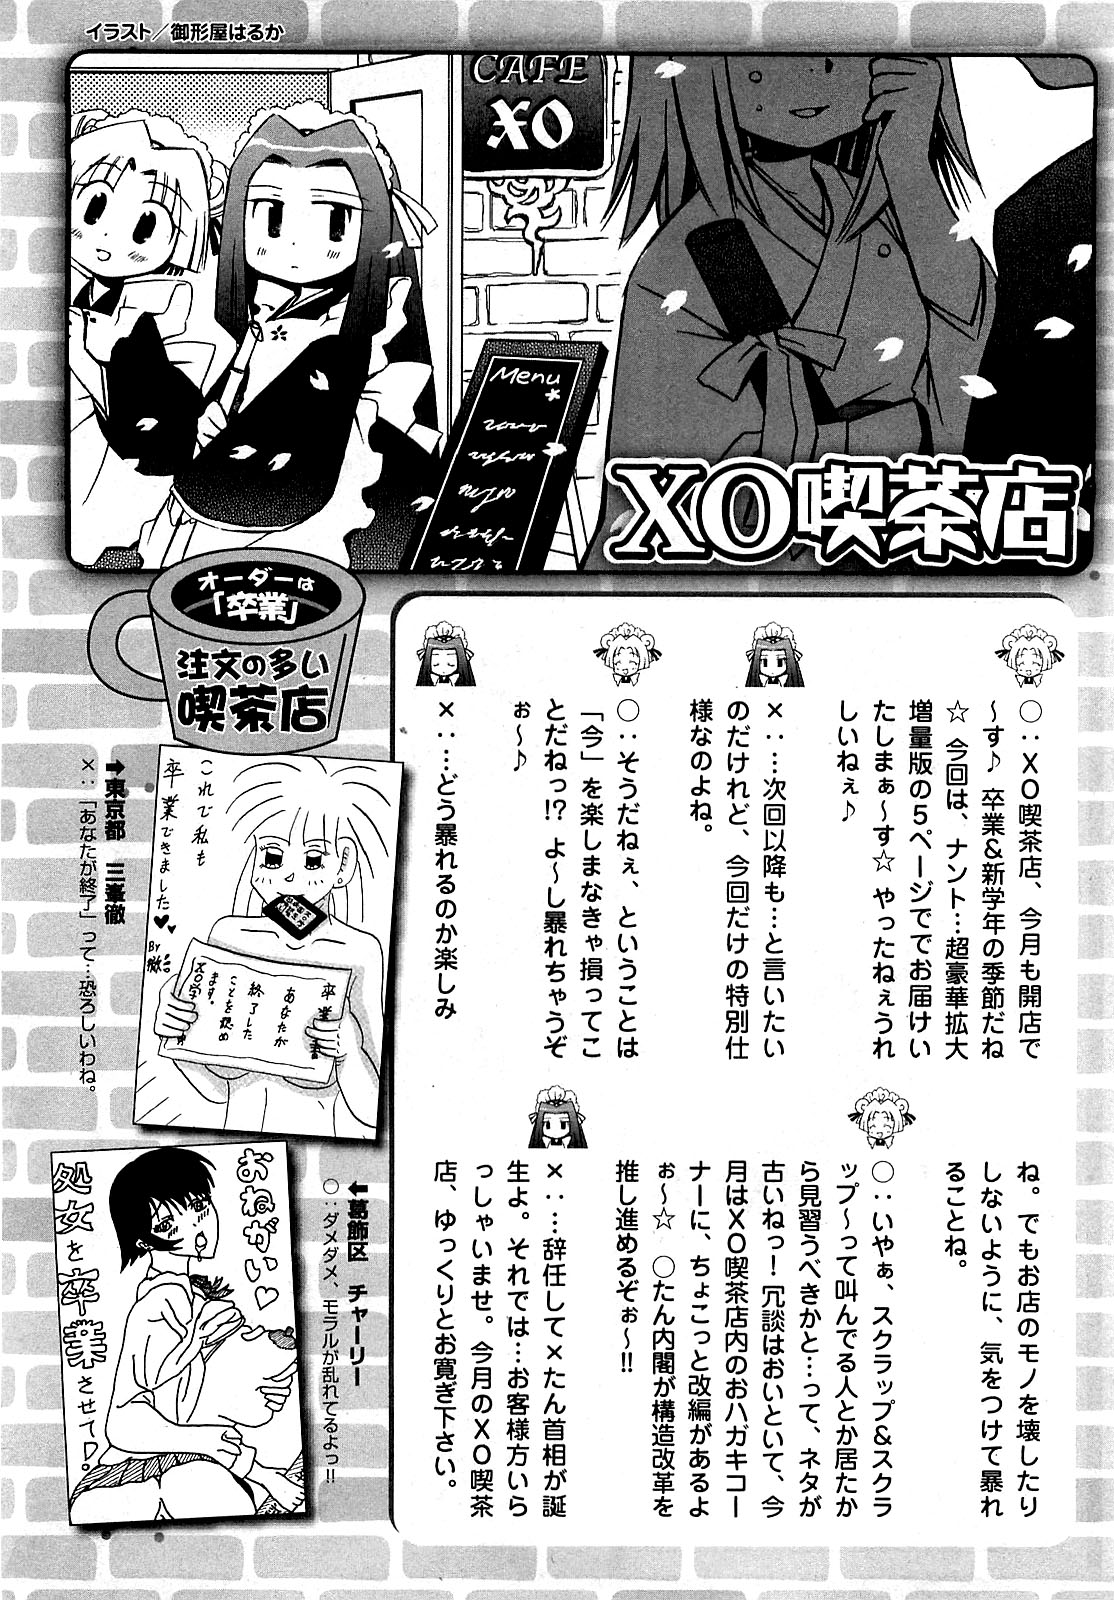 COMIC XO 2009年4月号 Vol.35